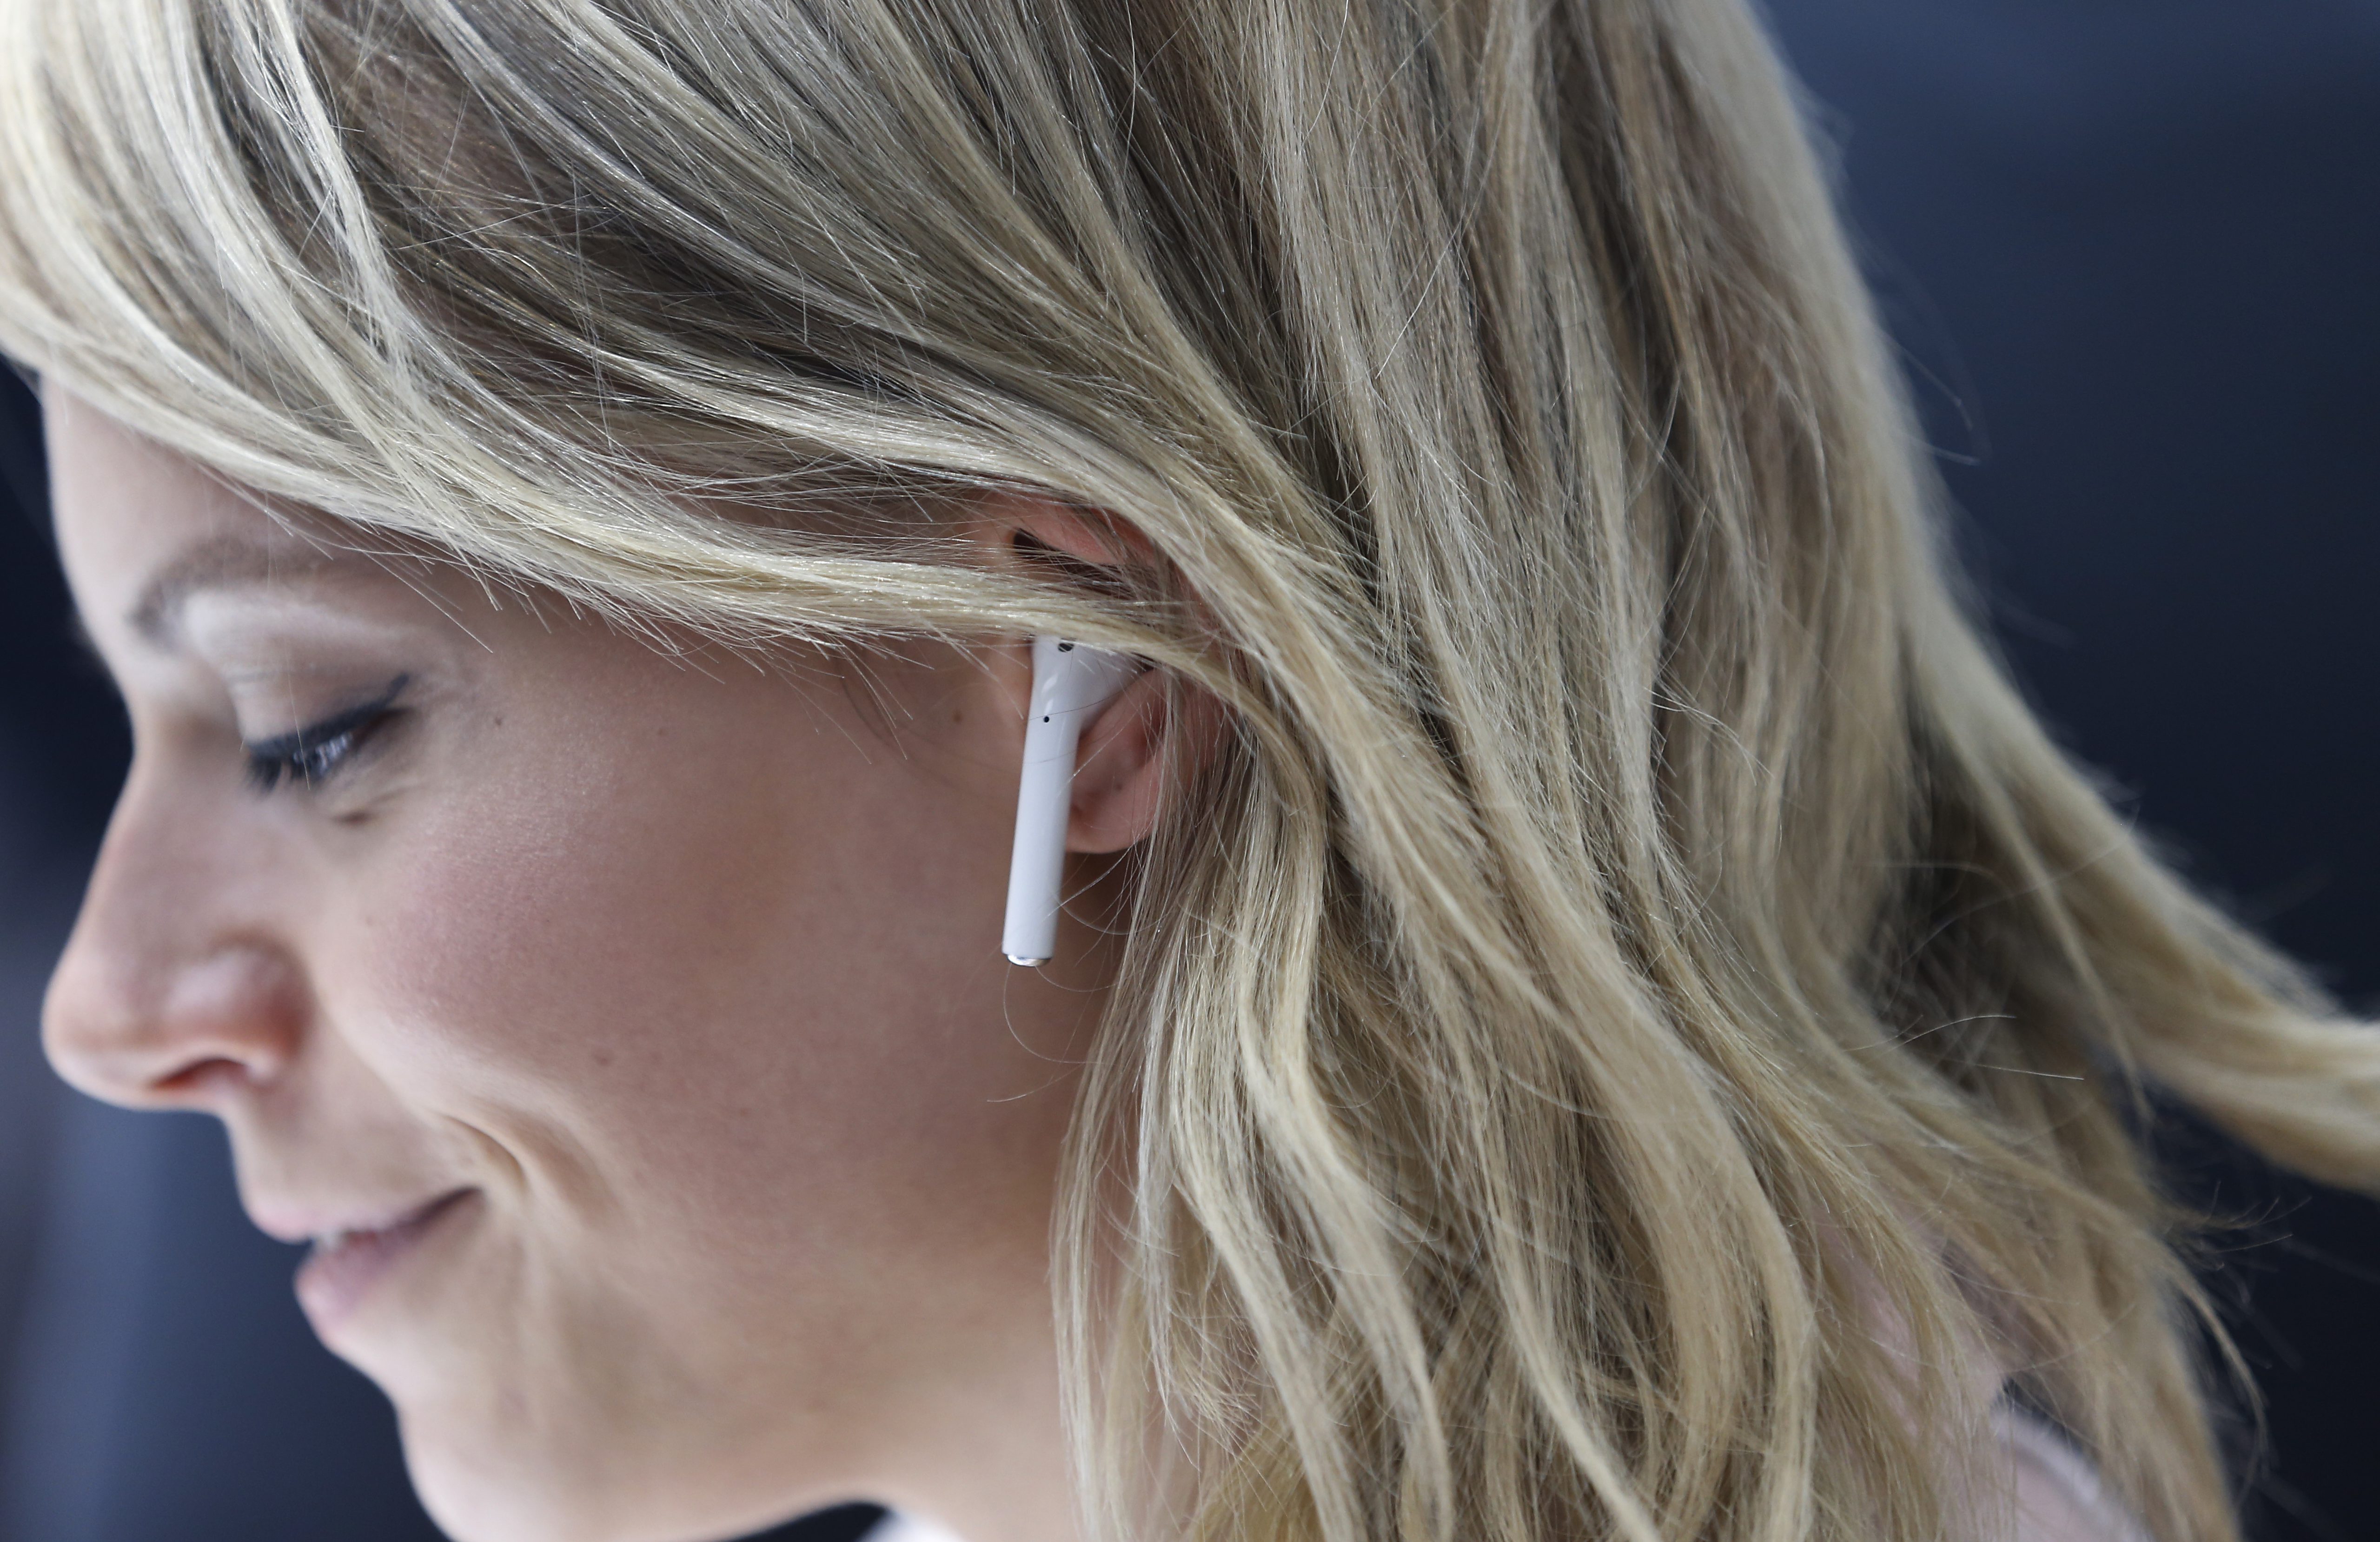  AppleHeadphone 'airpod' baru, yang menampilkan transmisi audio nirkabel dan baterai yang dapat diisi ulang yang sangat kecil